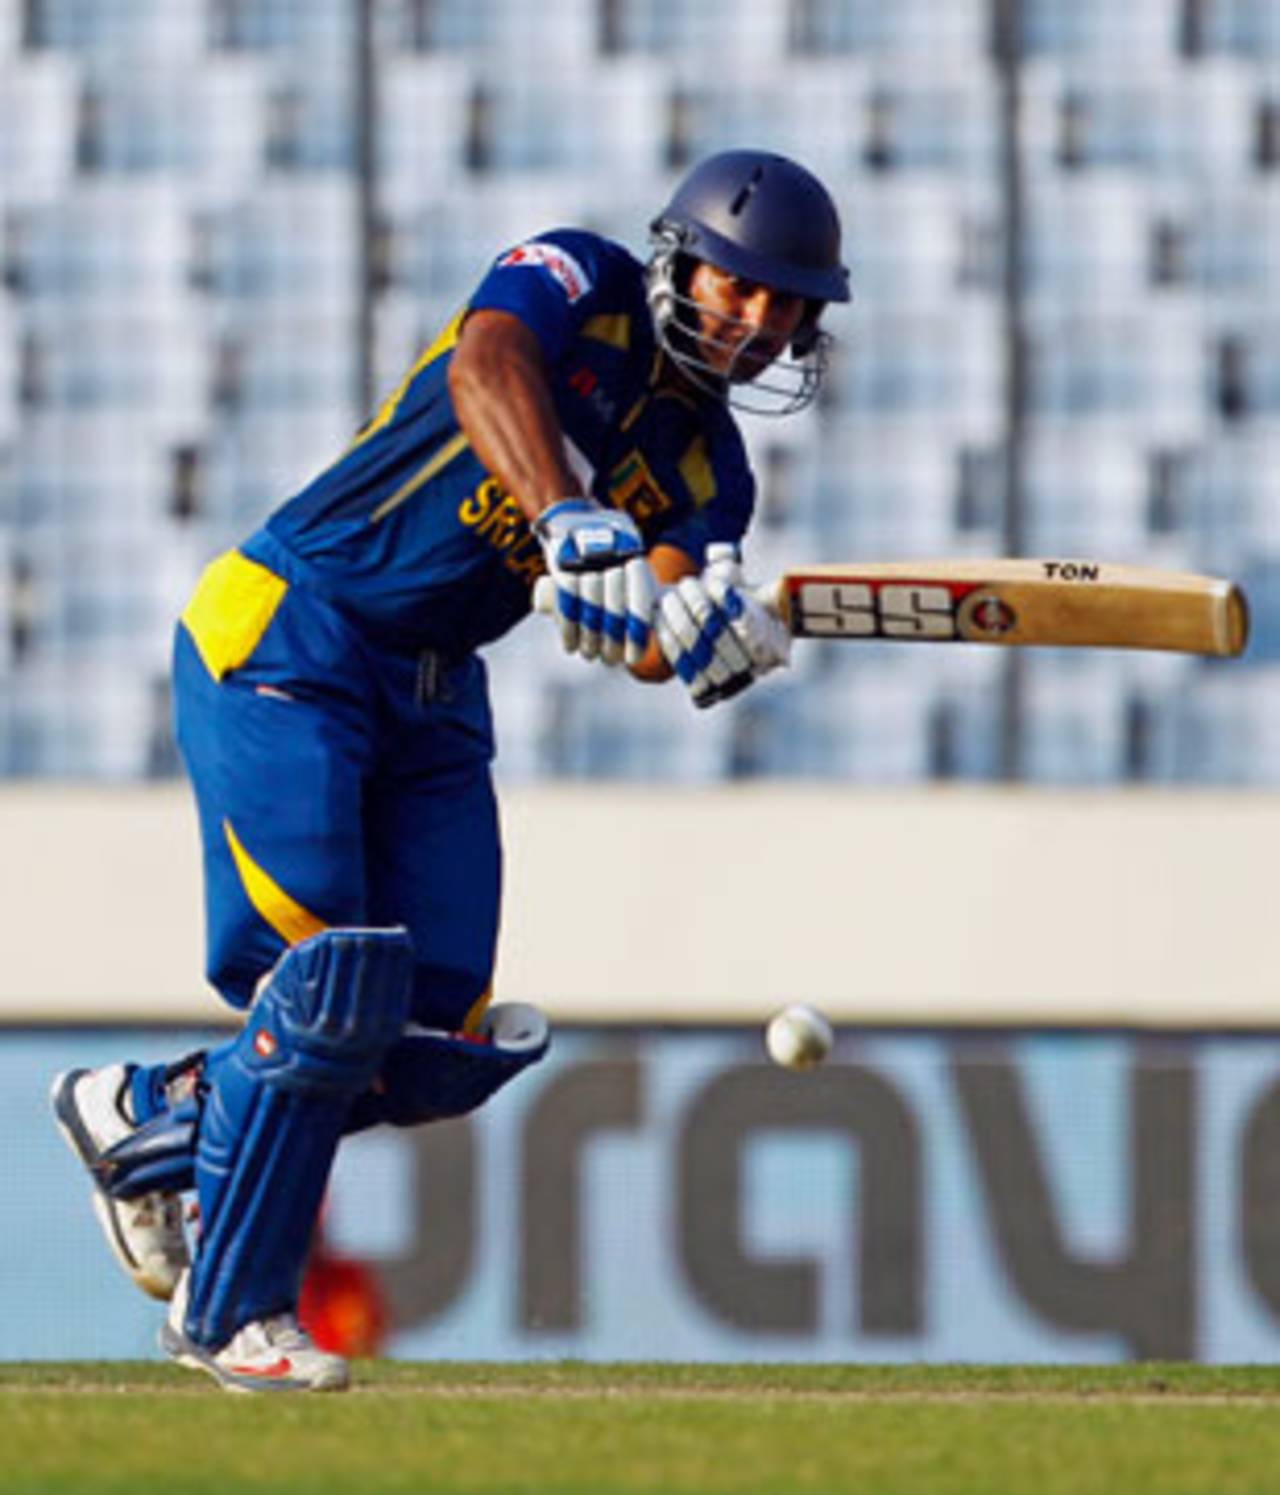 Kumar Sangakkara has amassed runs in Bangladesh this season, and Sri Lanka will hope his form helps him score a maiden hundred in a final&nbsp;&nbsp;&bull;&nbsp;&nbsp;Associated Press